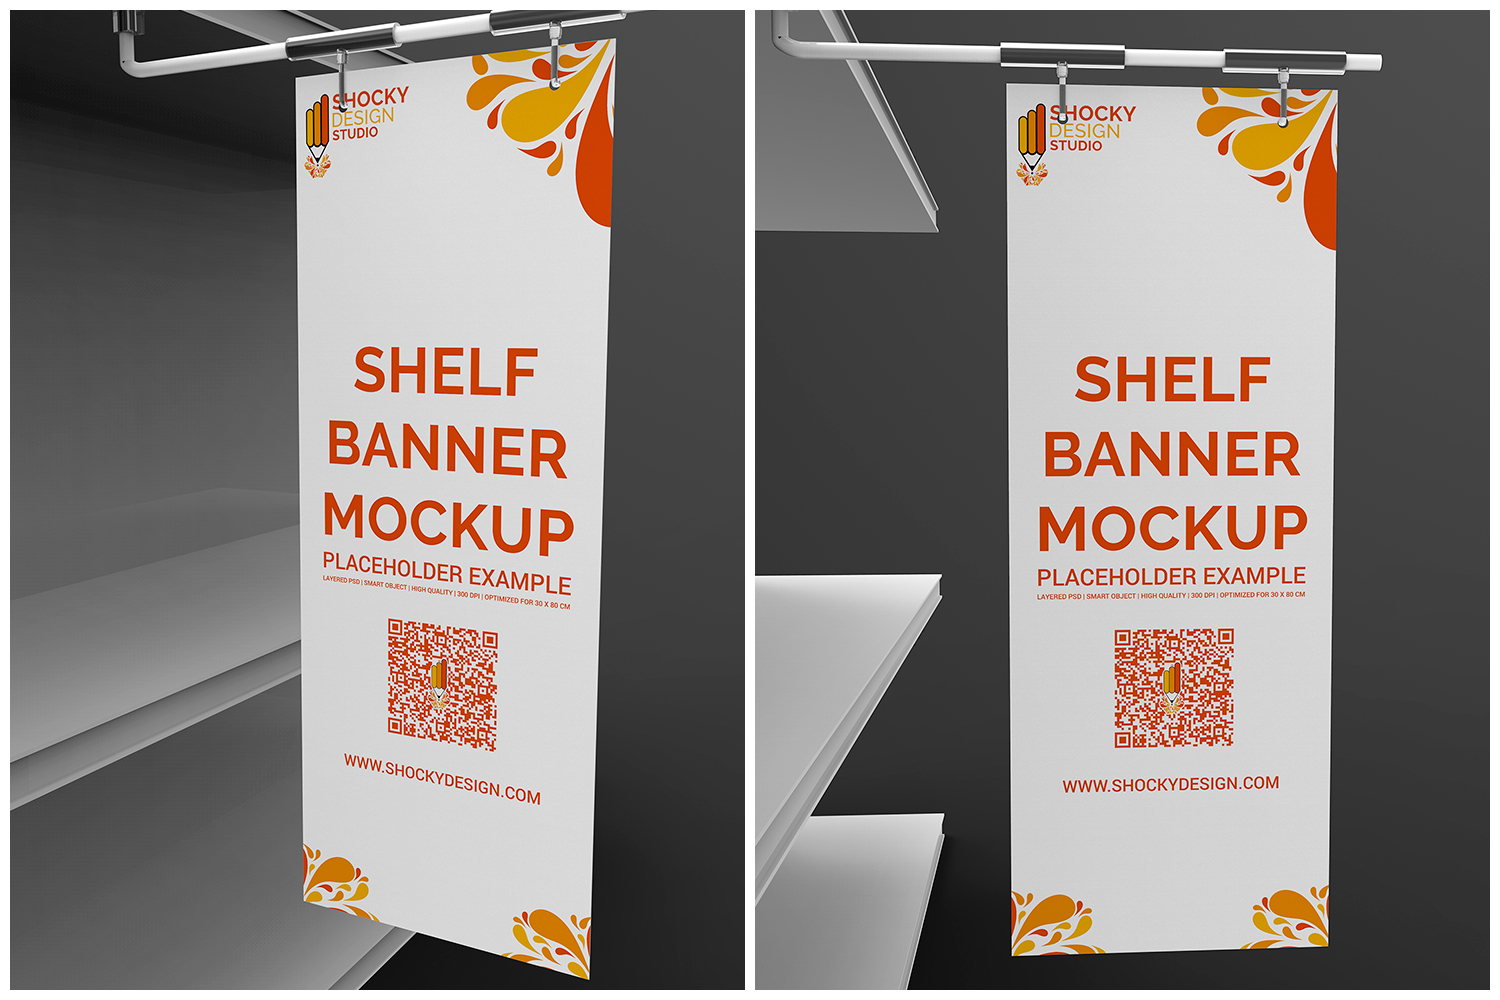 Download POSM Store Shelf Banner Mockup